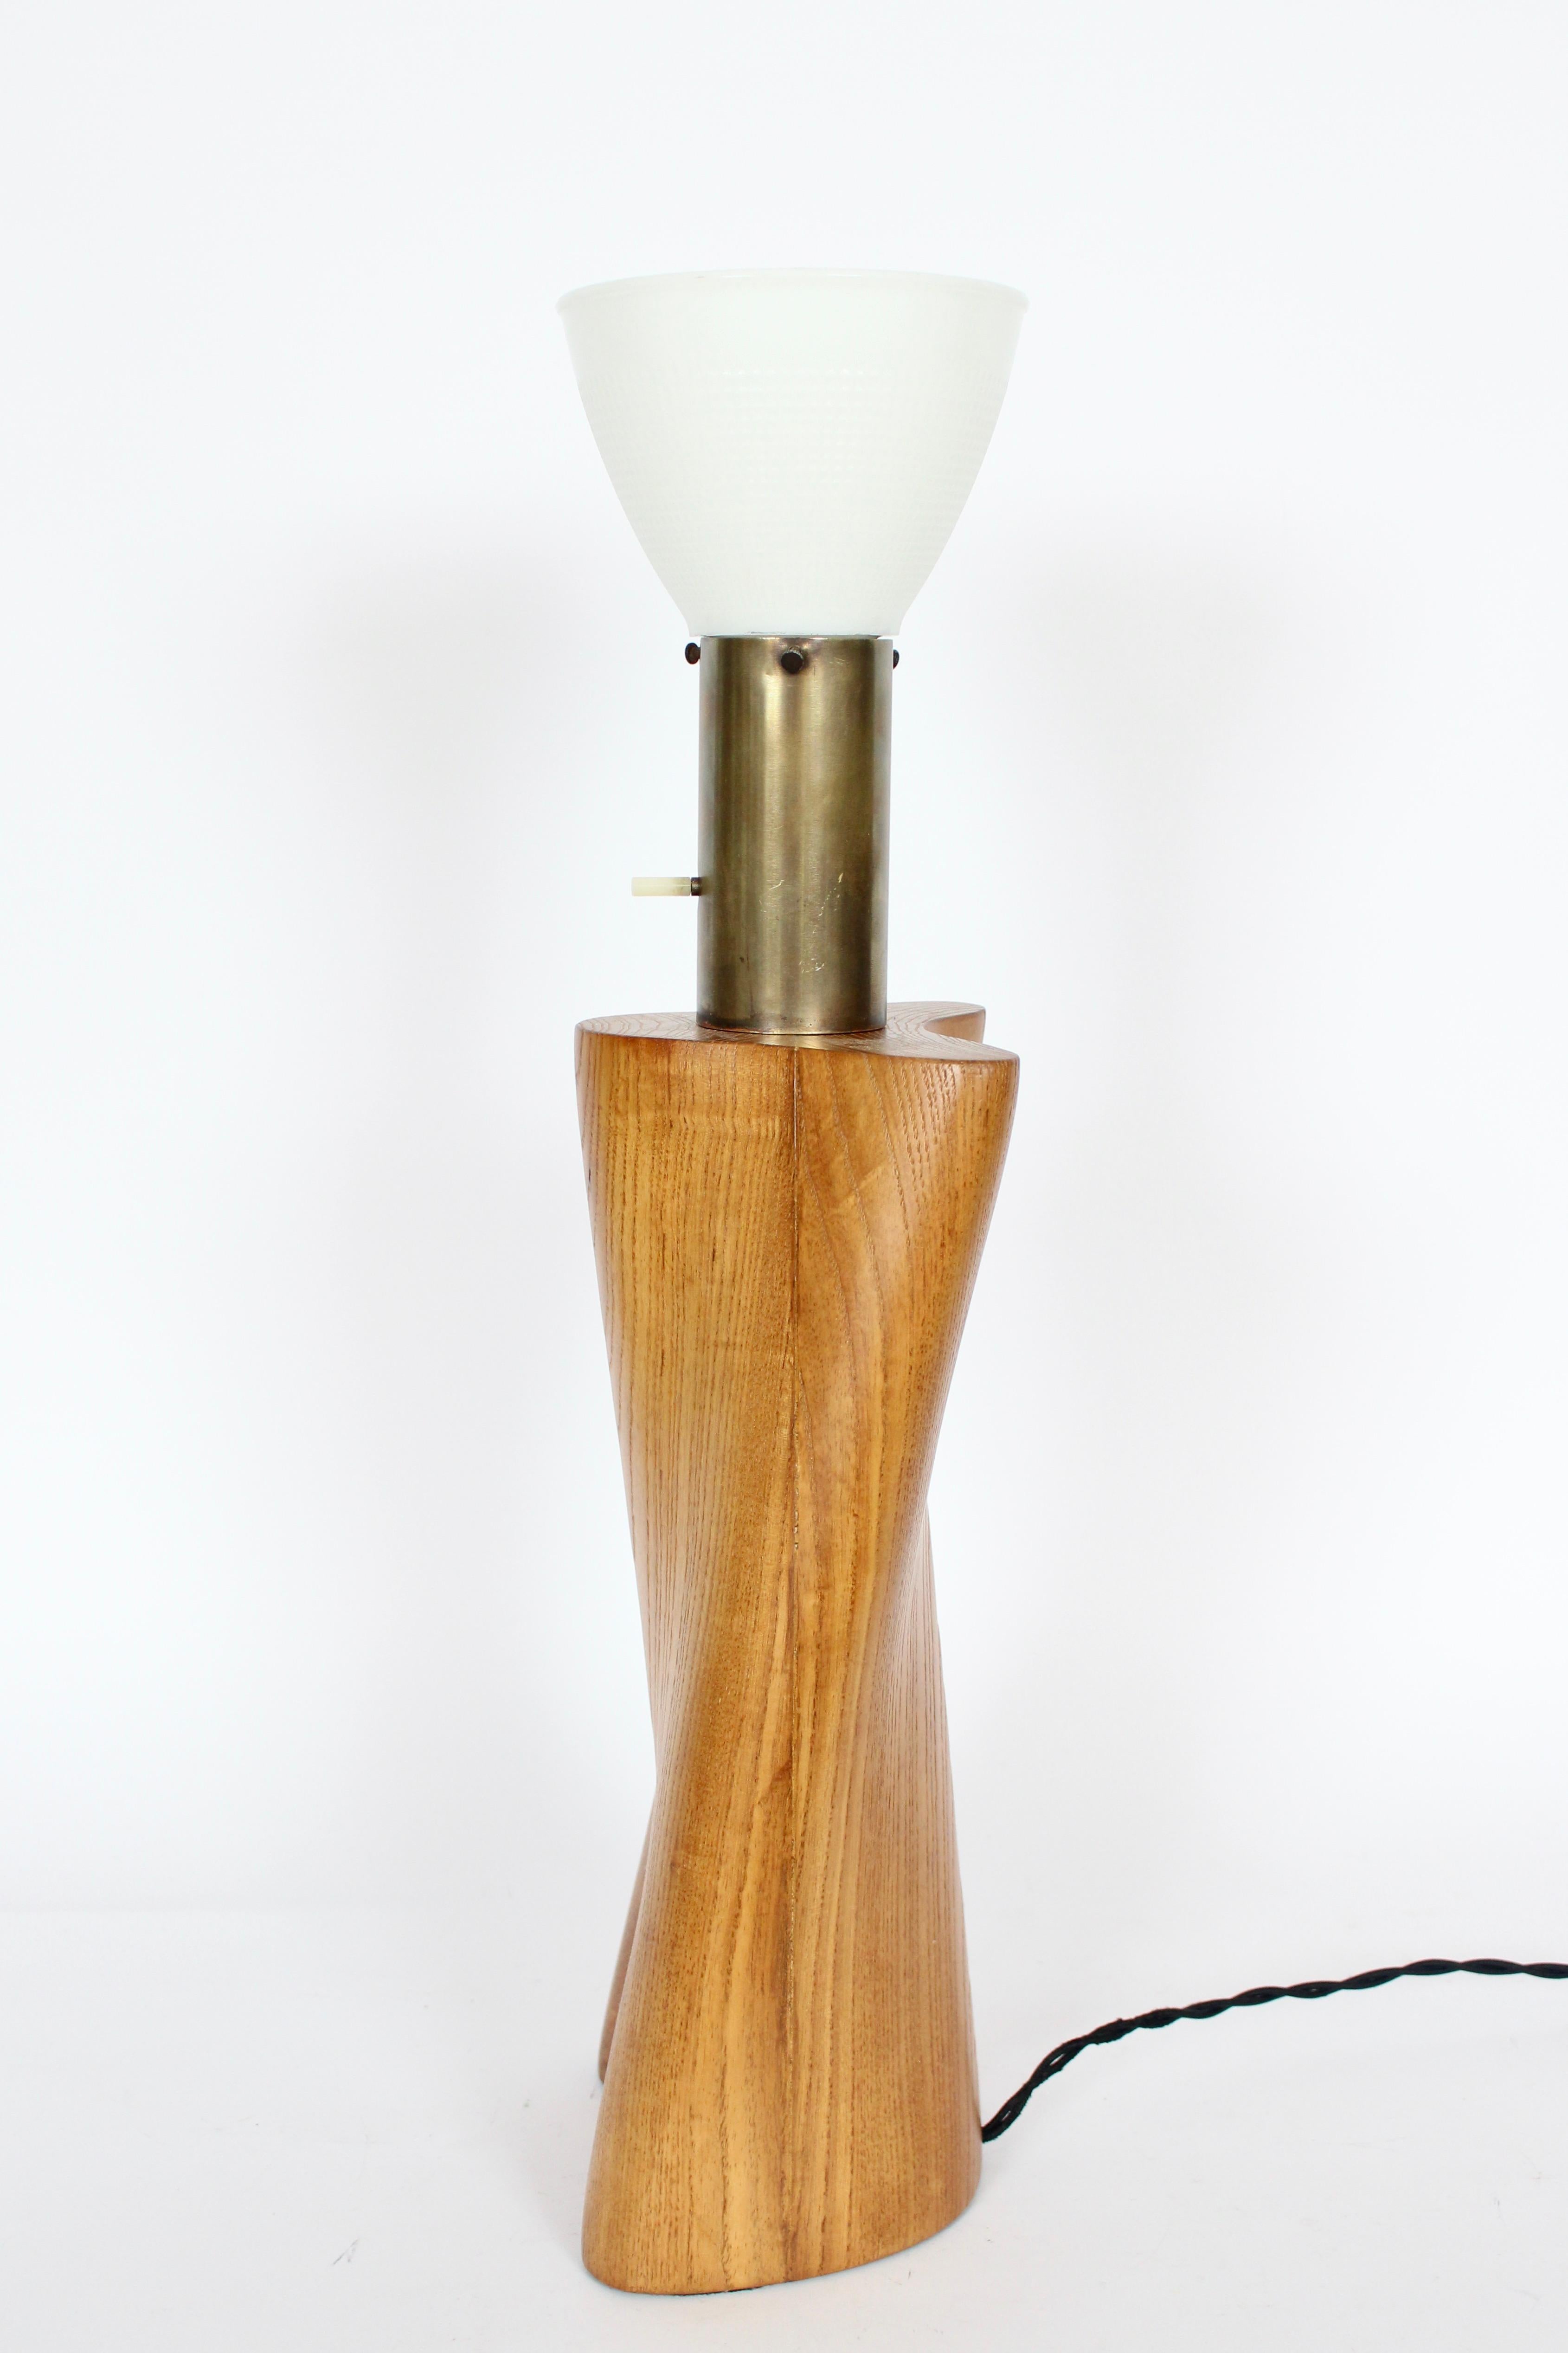 Yasha Heifetz Biomorphic Ash Table Lamp with Milk Glass Shade, 1940s For Sale 2